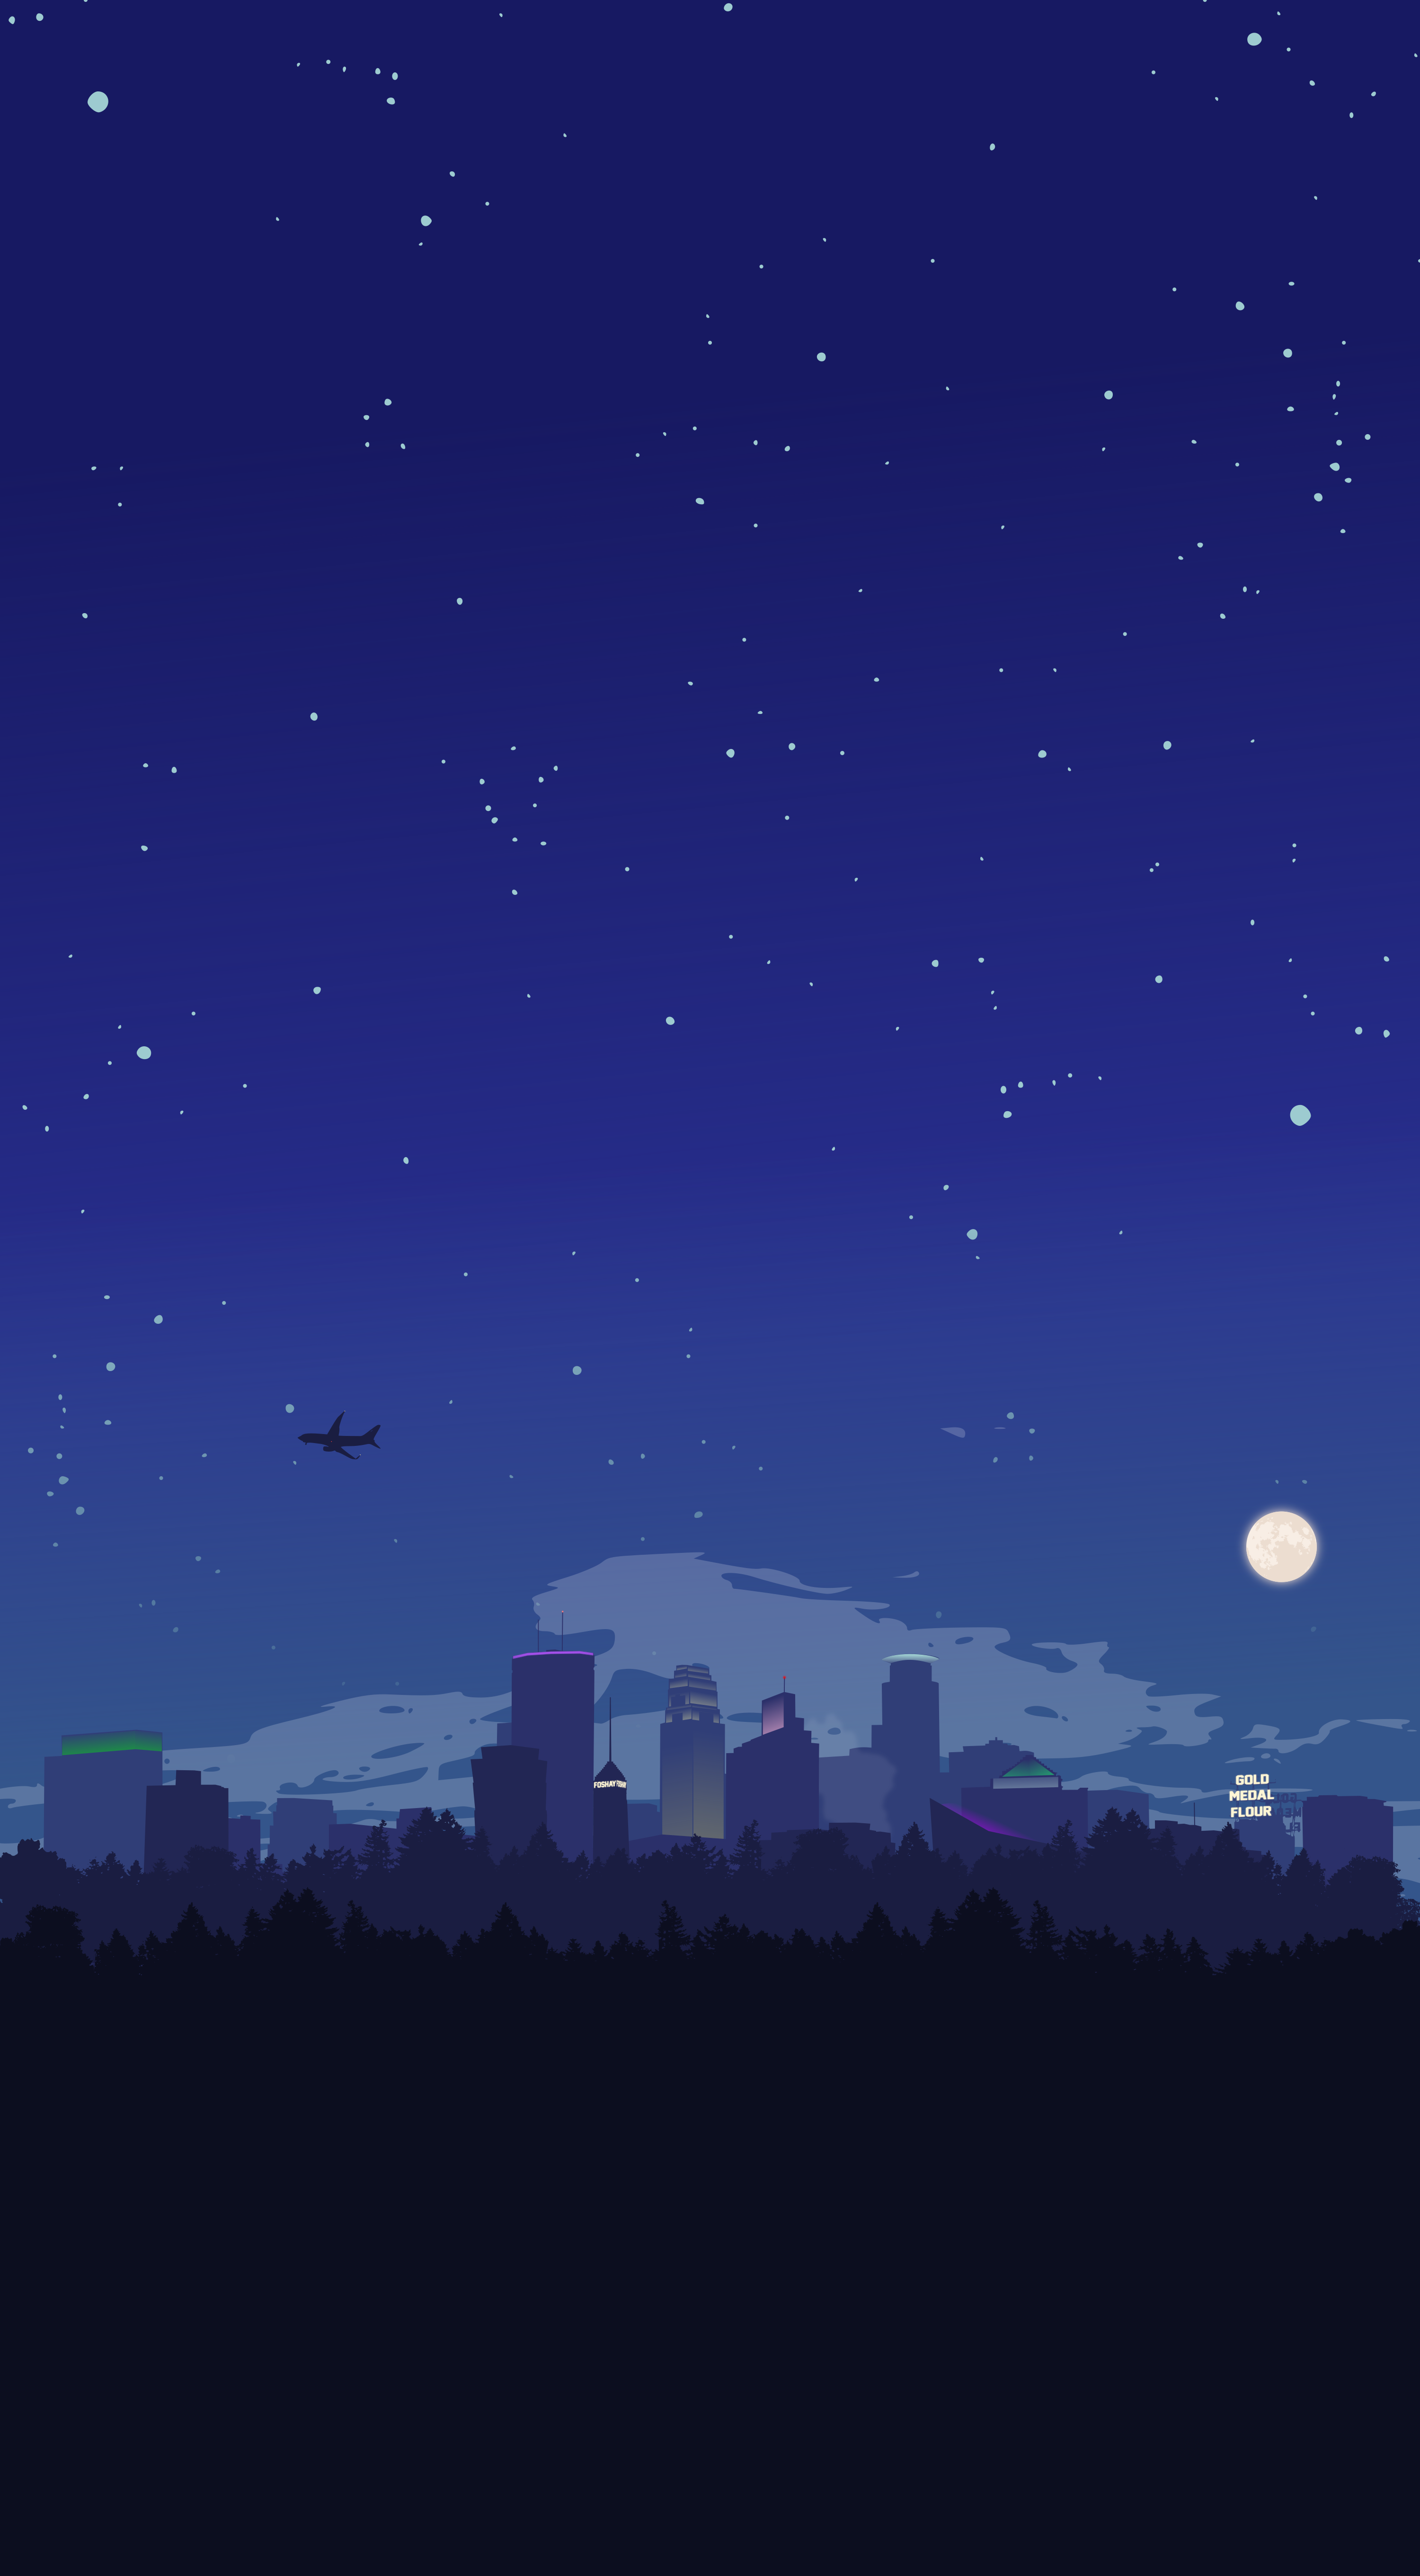 Minneapolis at night [OC]. Scenery wallpaper, Anime scenery wallpaper, Art wallpaper iphone